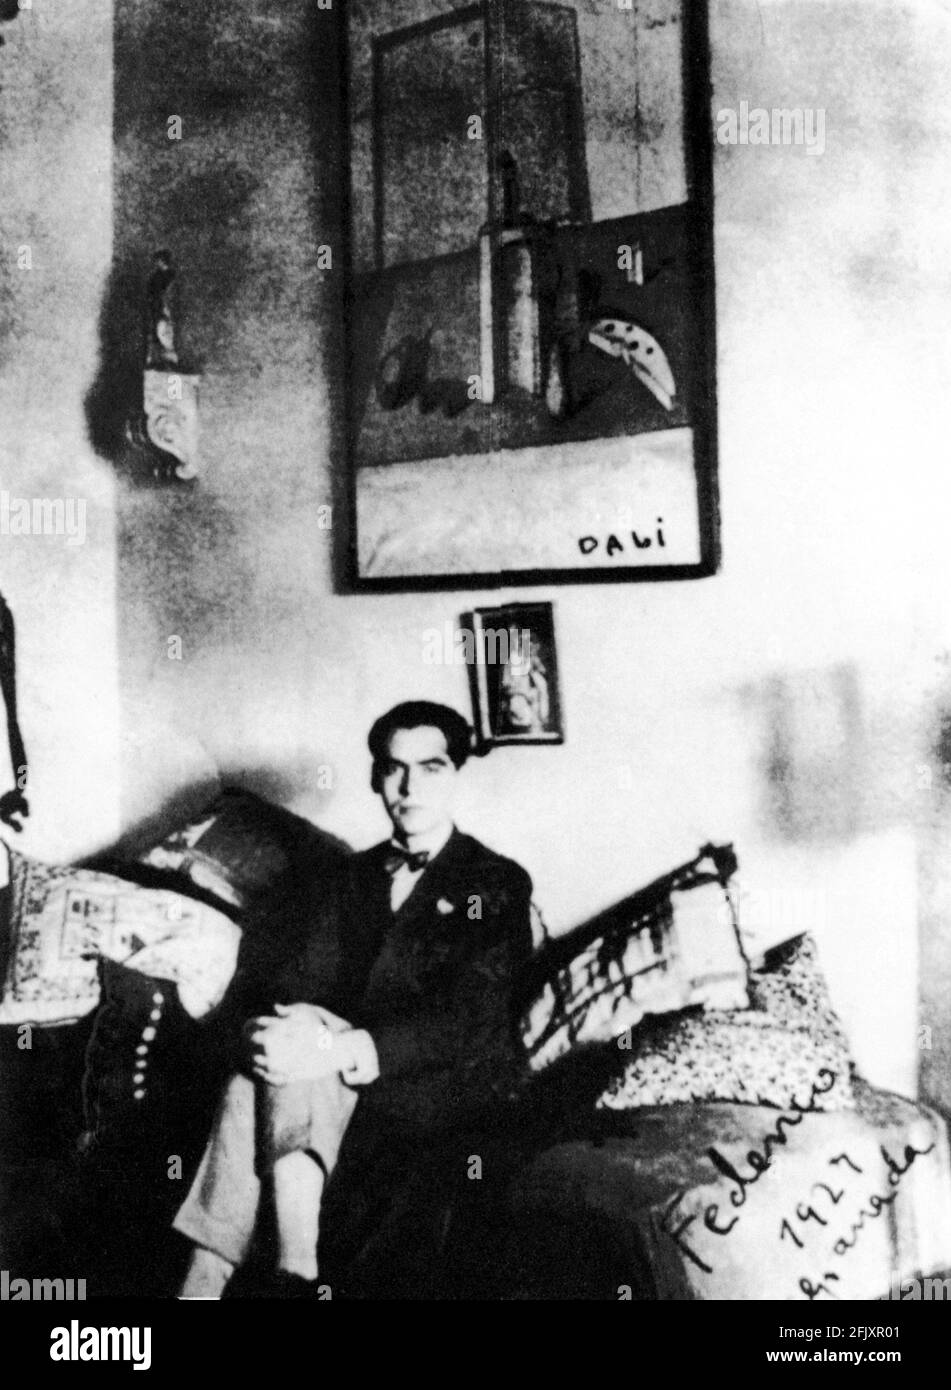 1927 , Madrid , Espagne : Le poète espagnol FEDERICO GARCIA LORCA ( 1898 - 1936 ) avec une peinture Salvador Dalì - TEATRO - THÉÂTRE - POETA - POÉSIE - POÉSIE - SCRITTORE - DRAMMATURGO - GAY - LGBT - omosessuale - omosexualité - omosessualità - homosexuel - cravate - cravatta - papilon --- Archivio GBB Banque D'Images